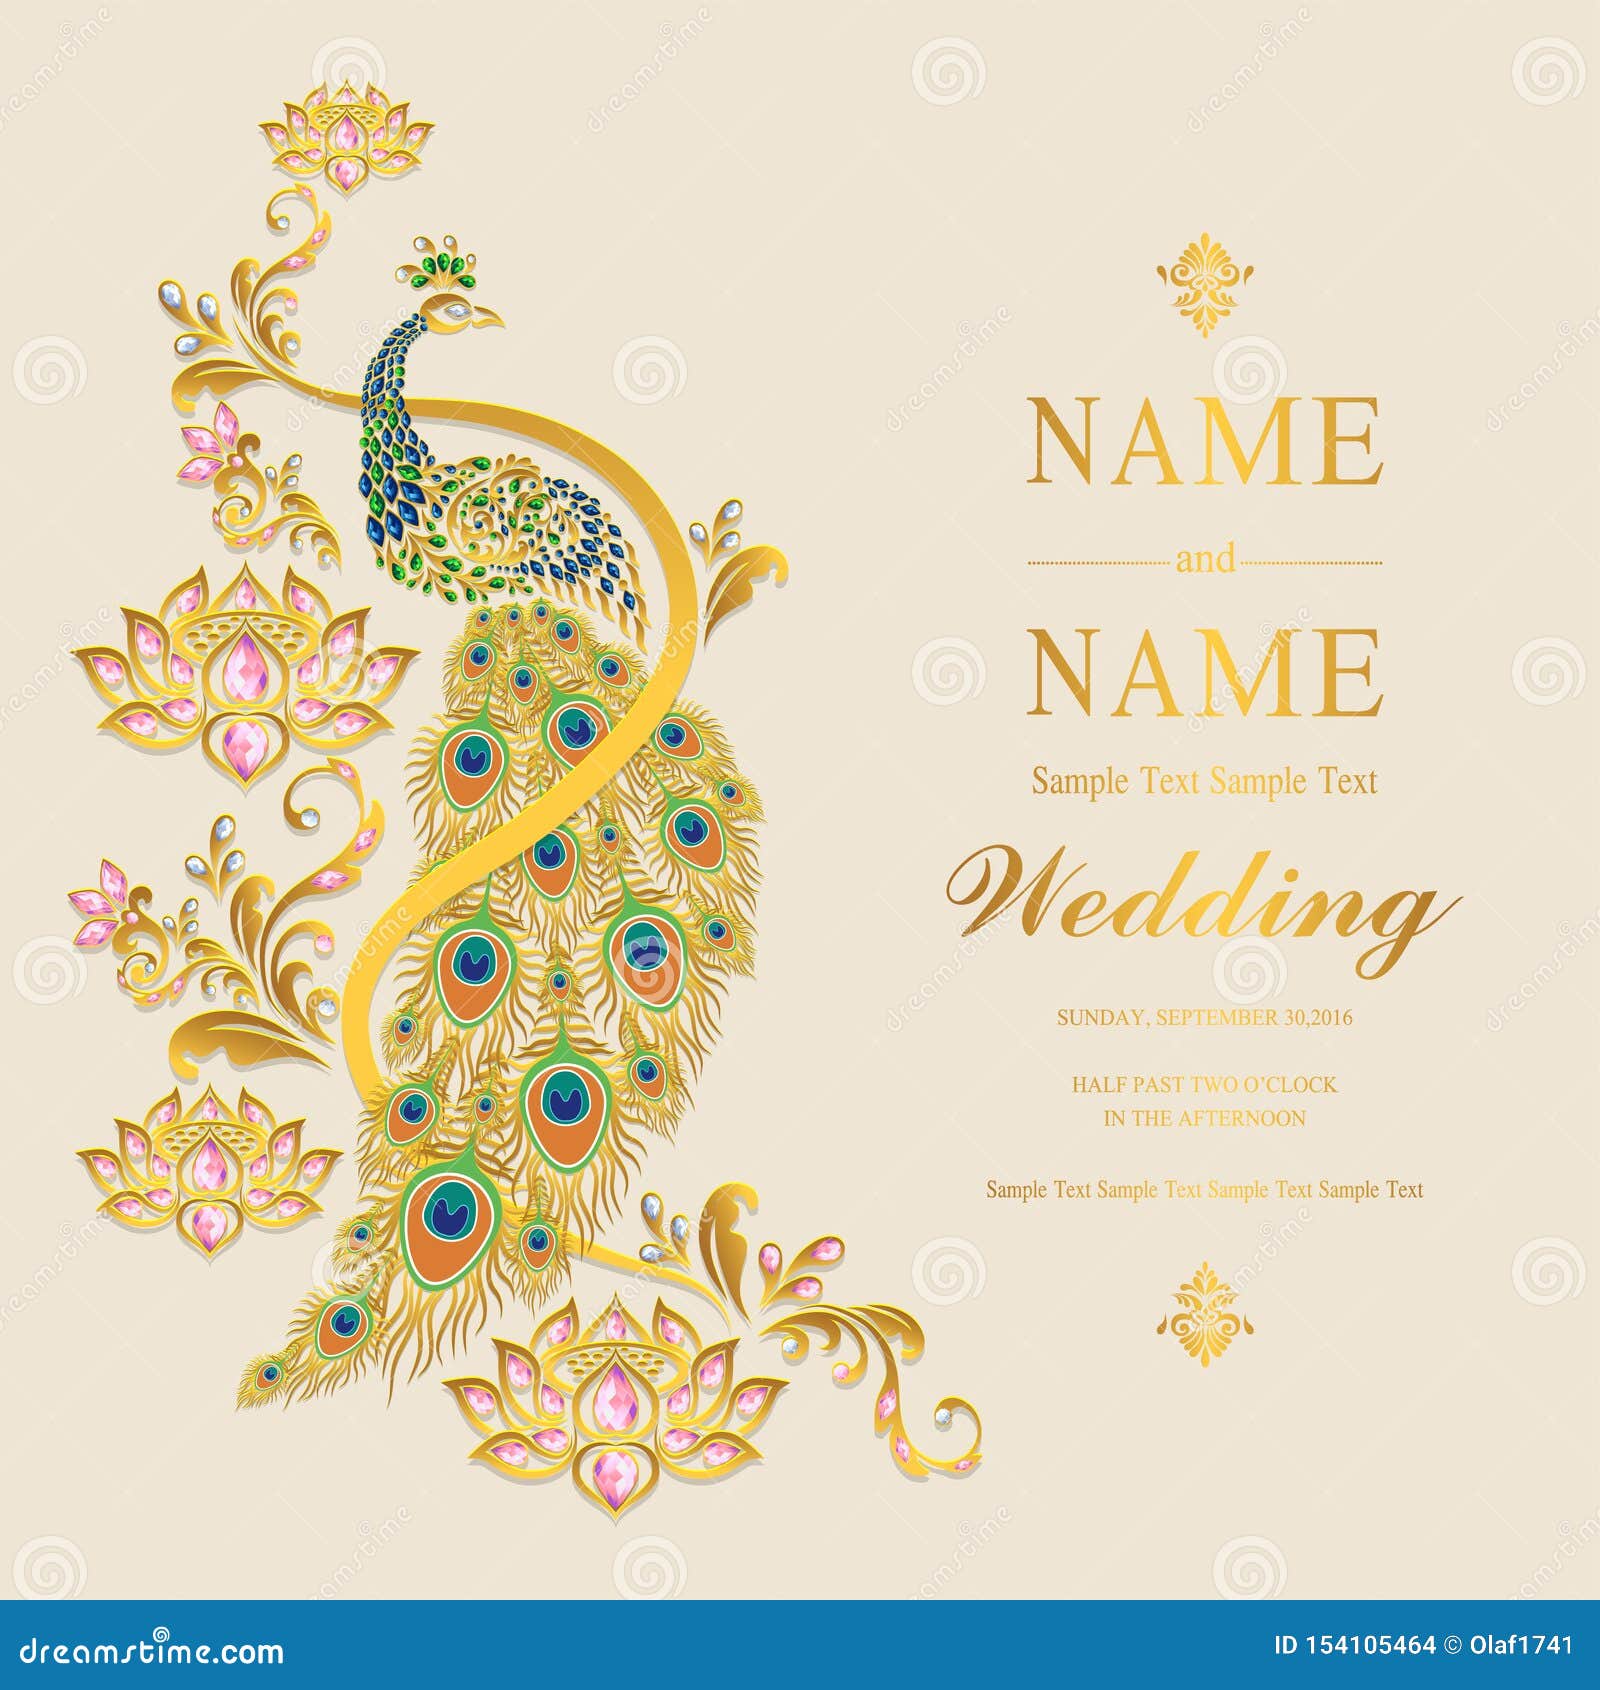 Indian Wedding Invitation Card Templates . Stock Vector For Indian Wedding Cards Design Templates